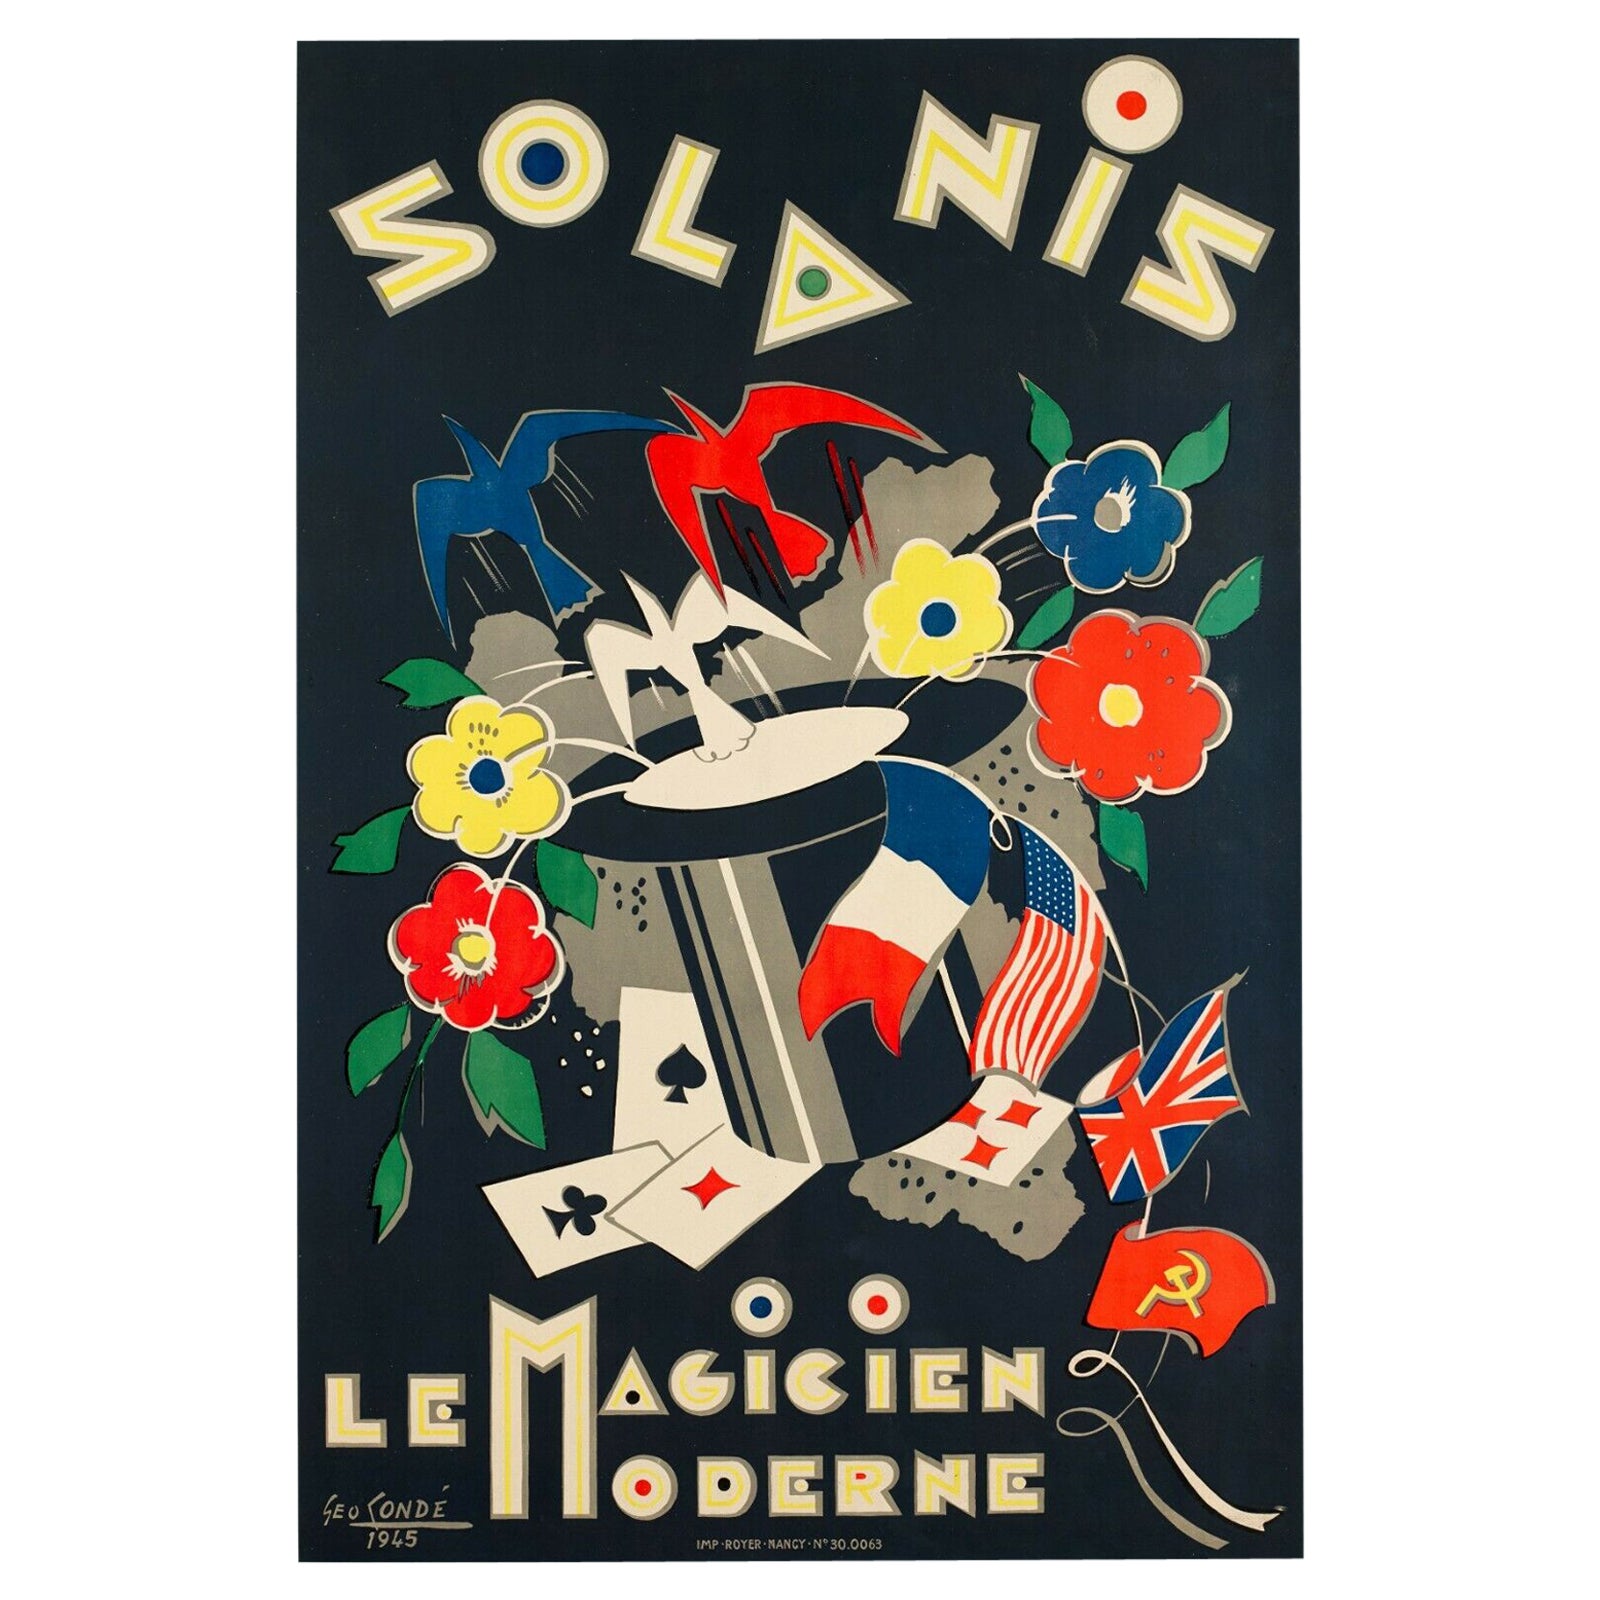 Original Poster-Geo Condé-Solanis Magician-Dove-Map, Flag, 1945